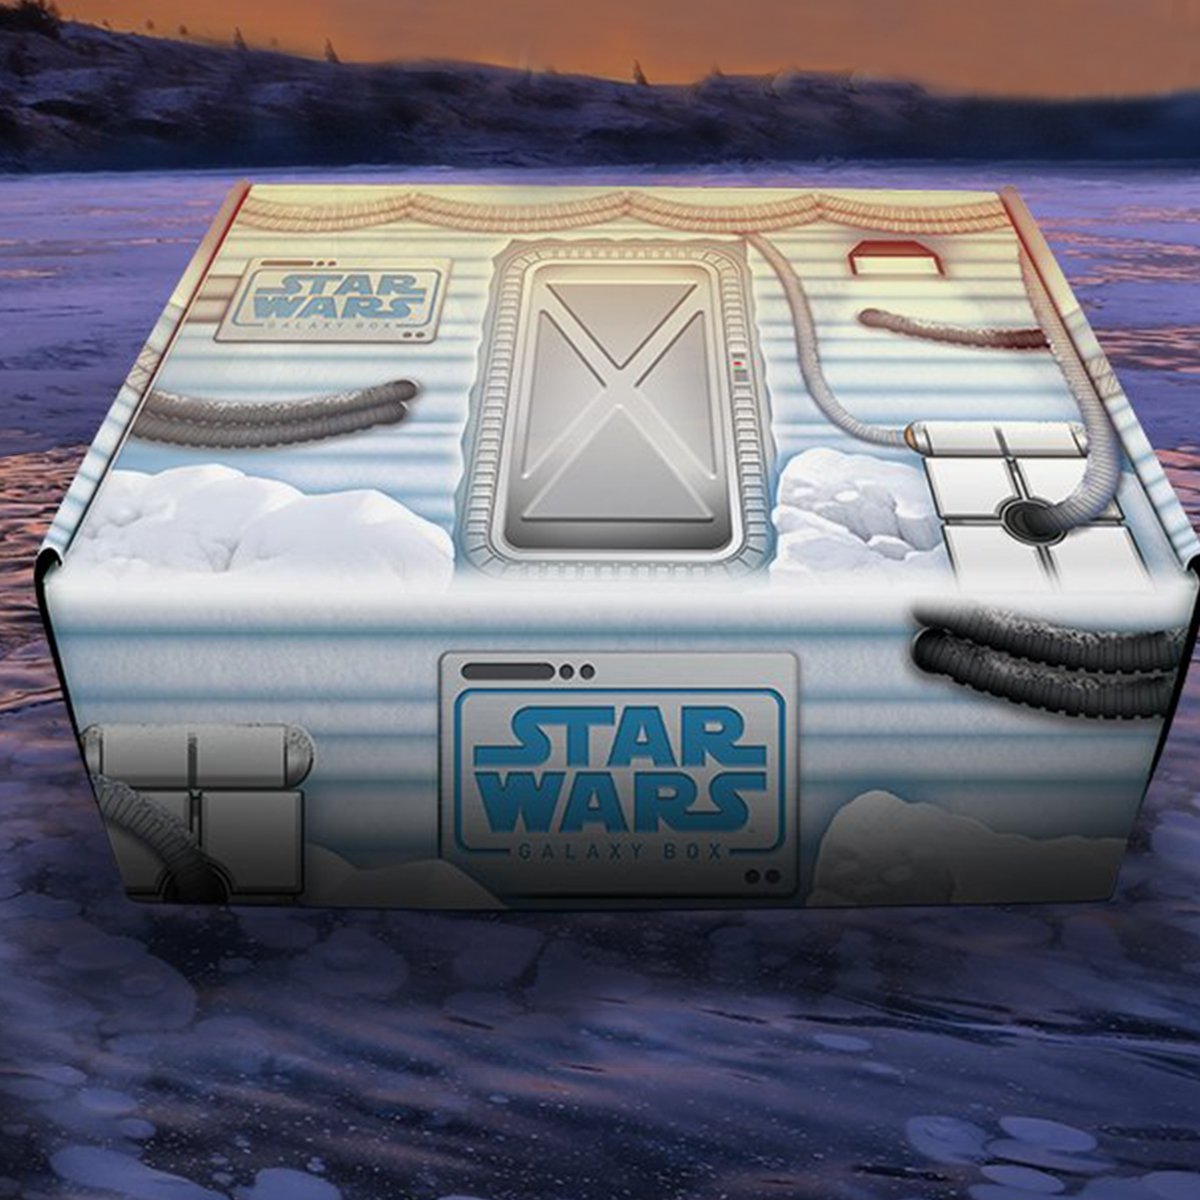 CultureFly’s Star Wars Galaxy Box Winter 2021 Theme Reveal